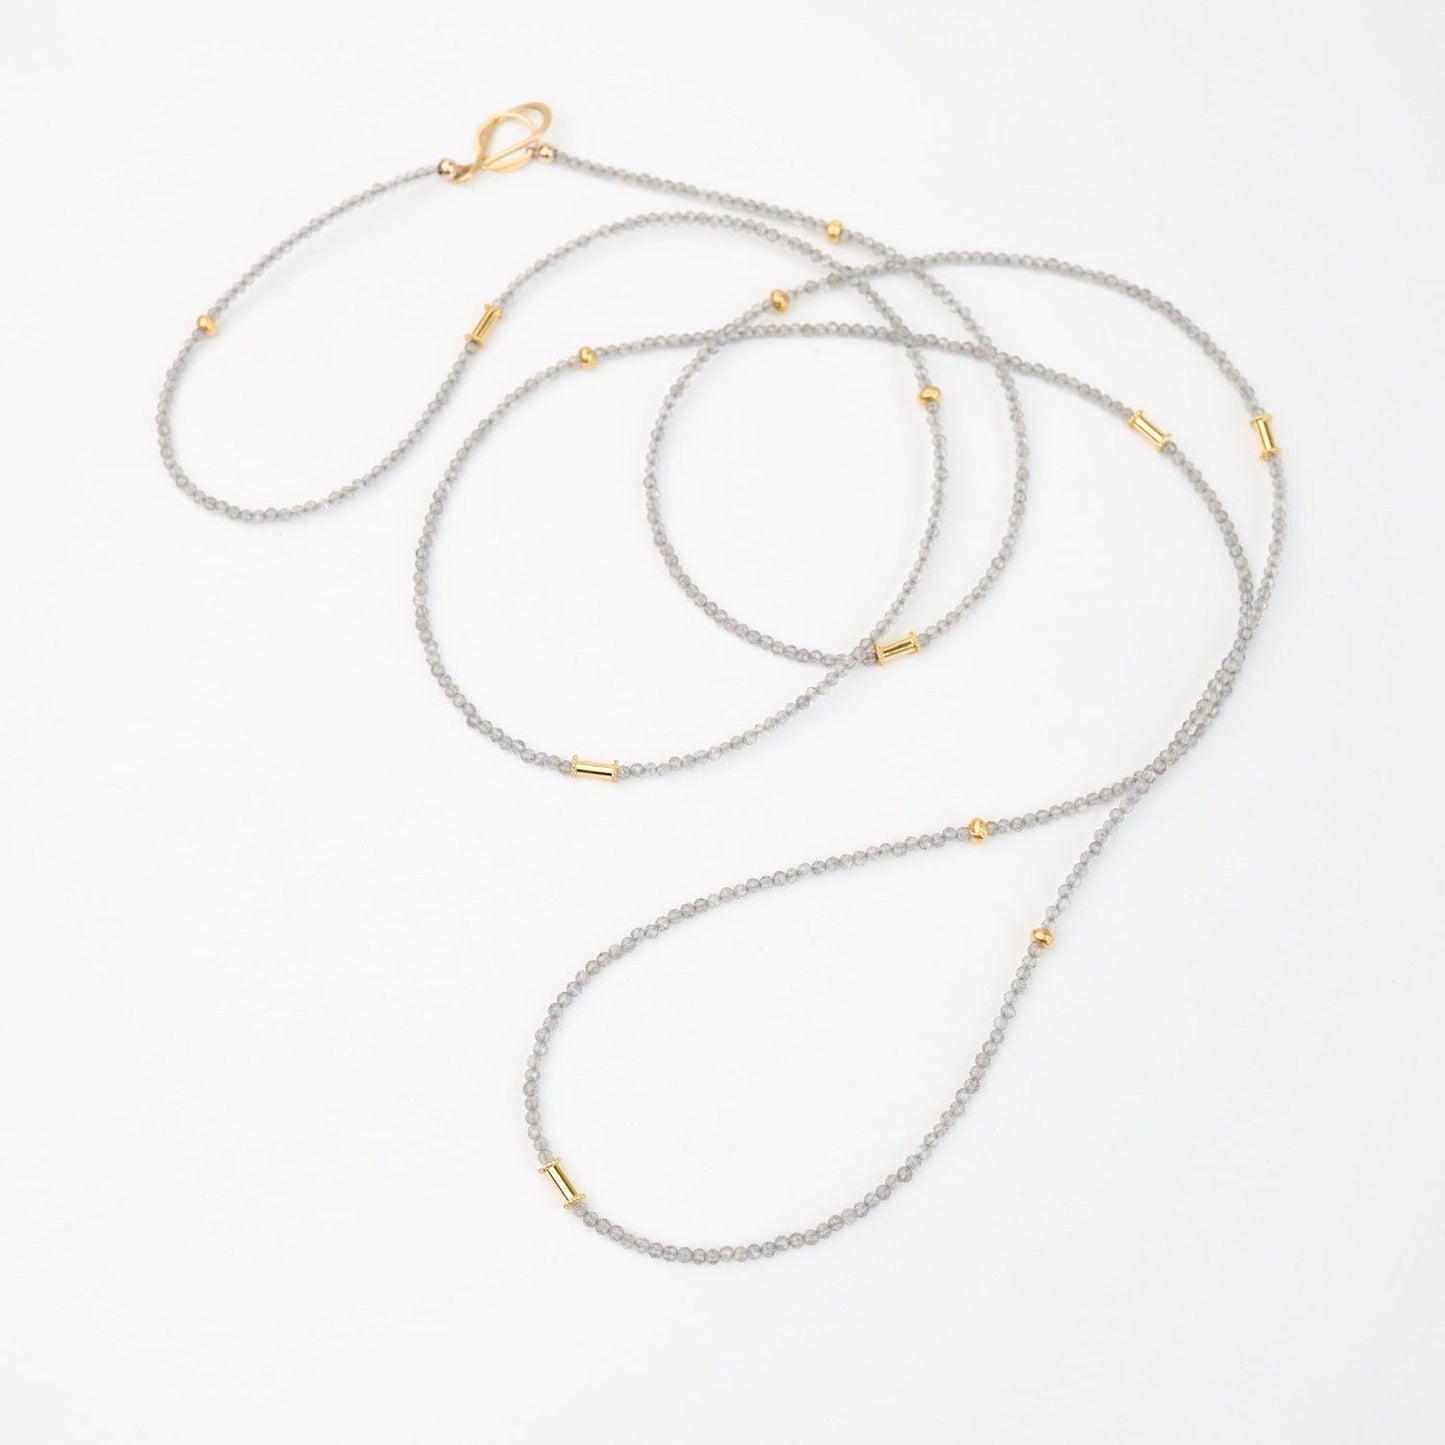 NKL-GF Labradorite and Gold Vermeil Necklace